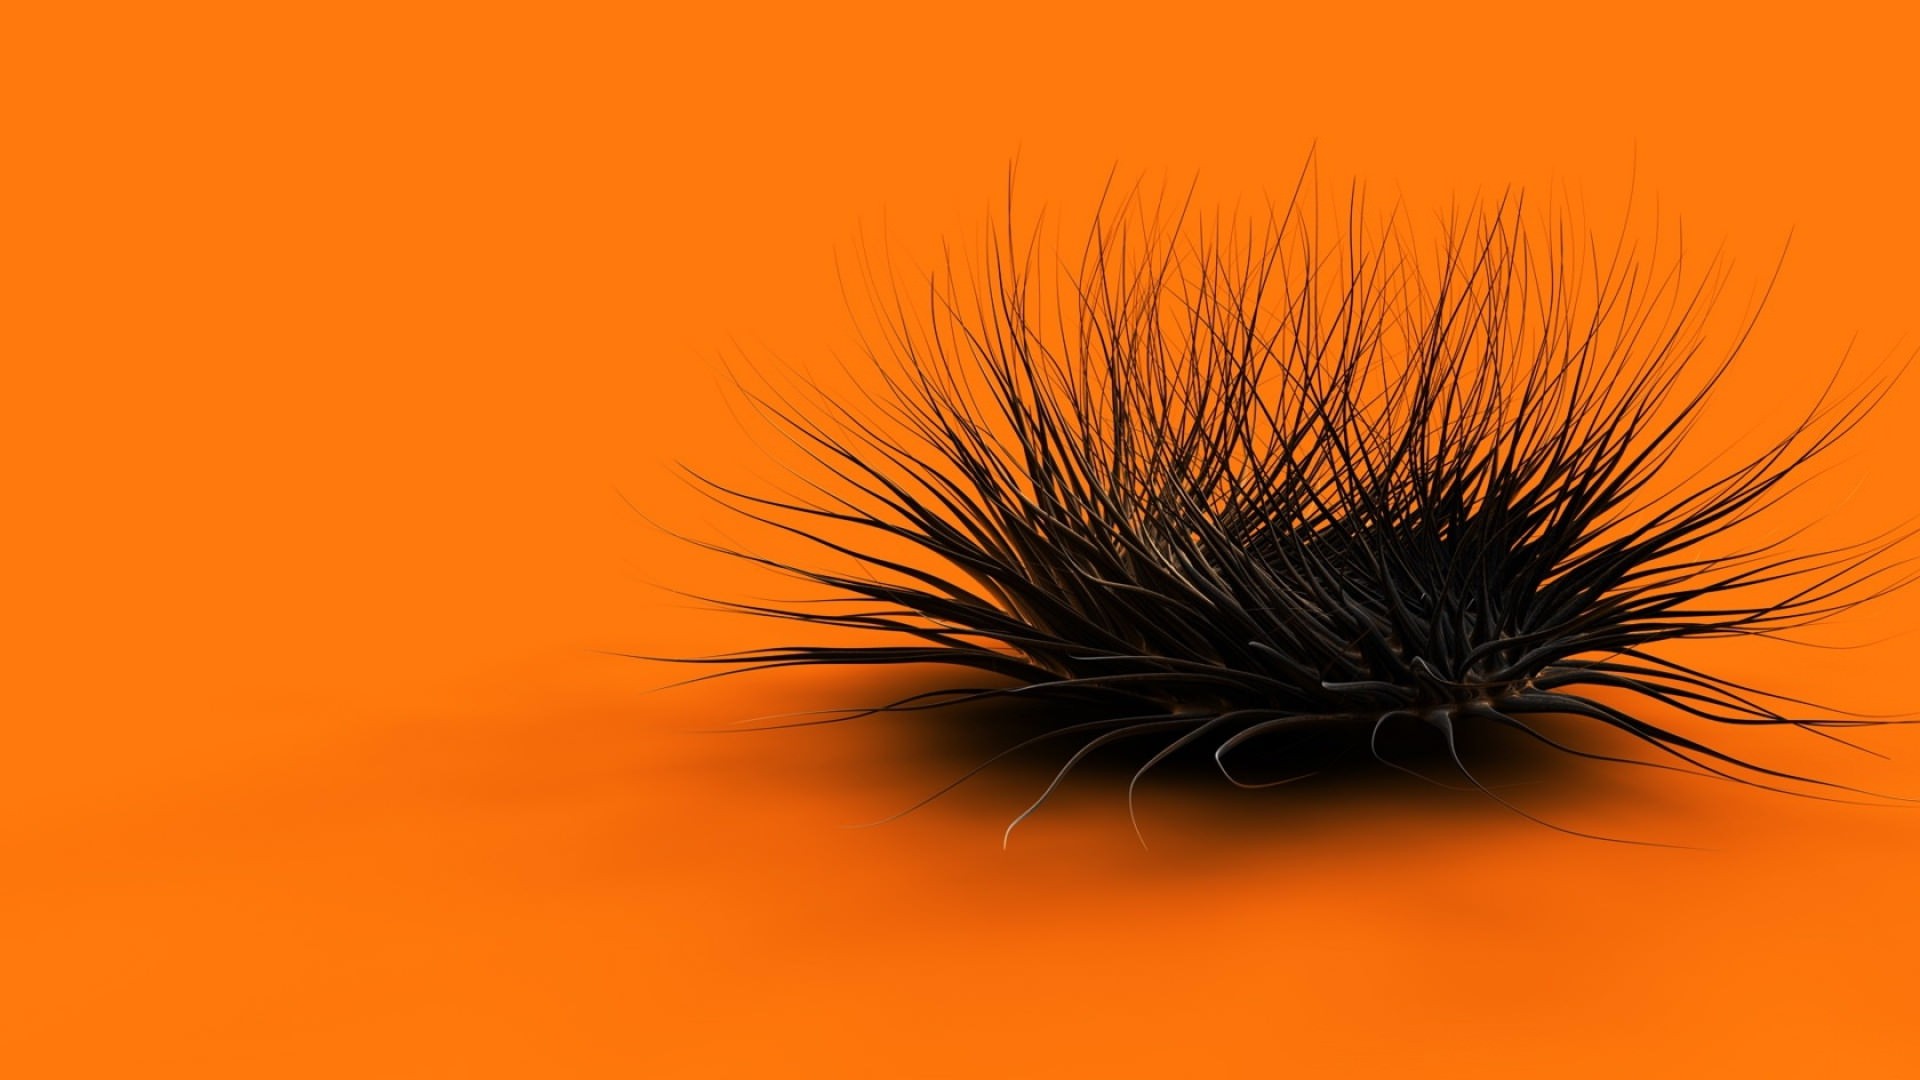  Orange  and Black  background   Download free stunning HD 